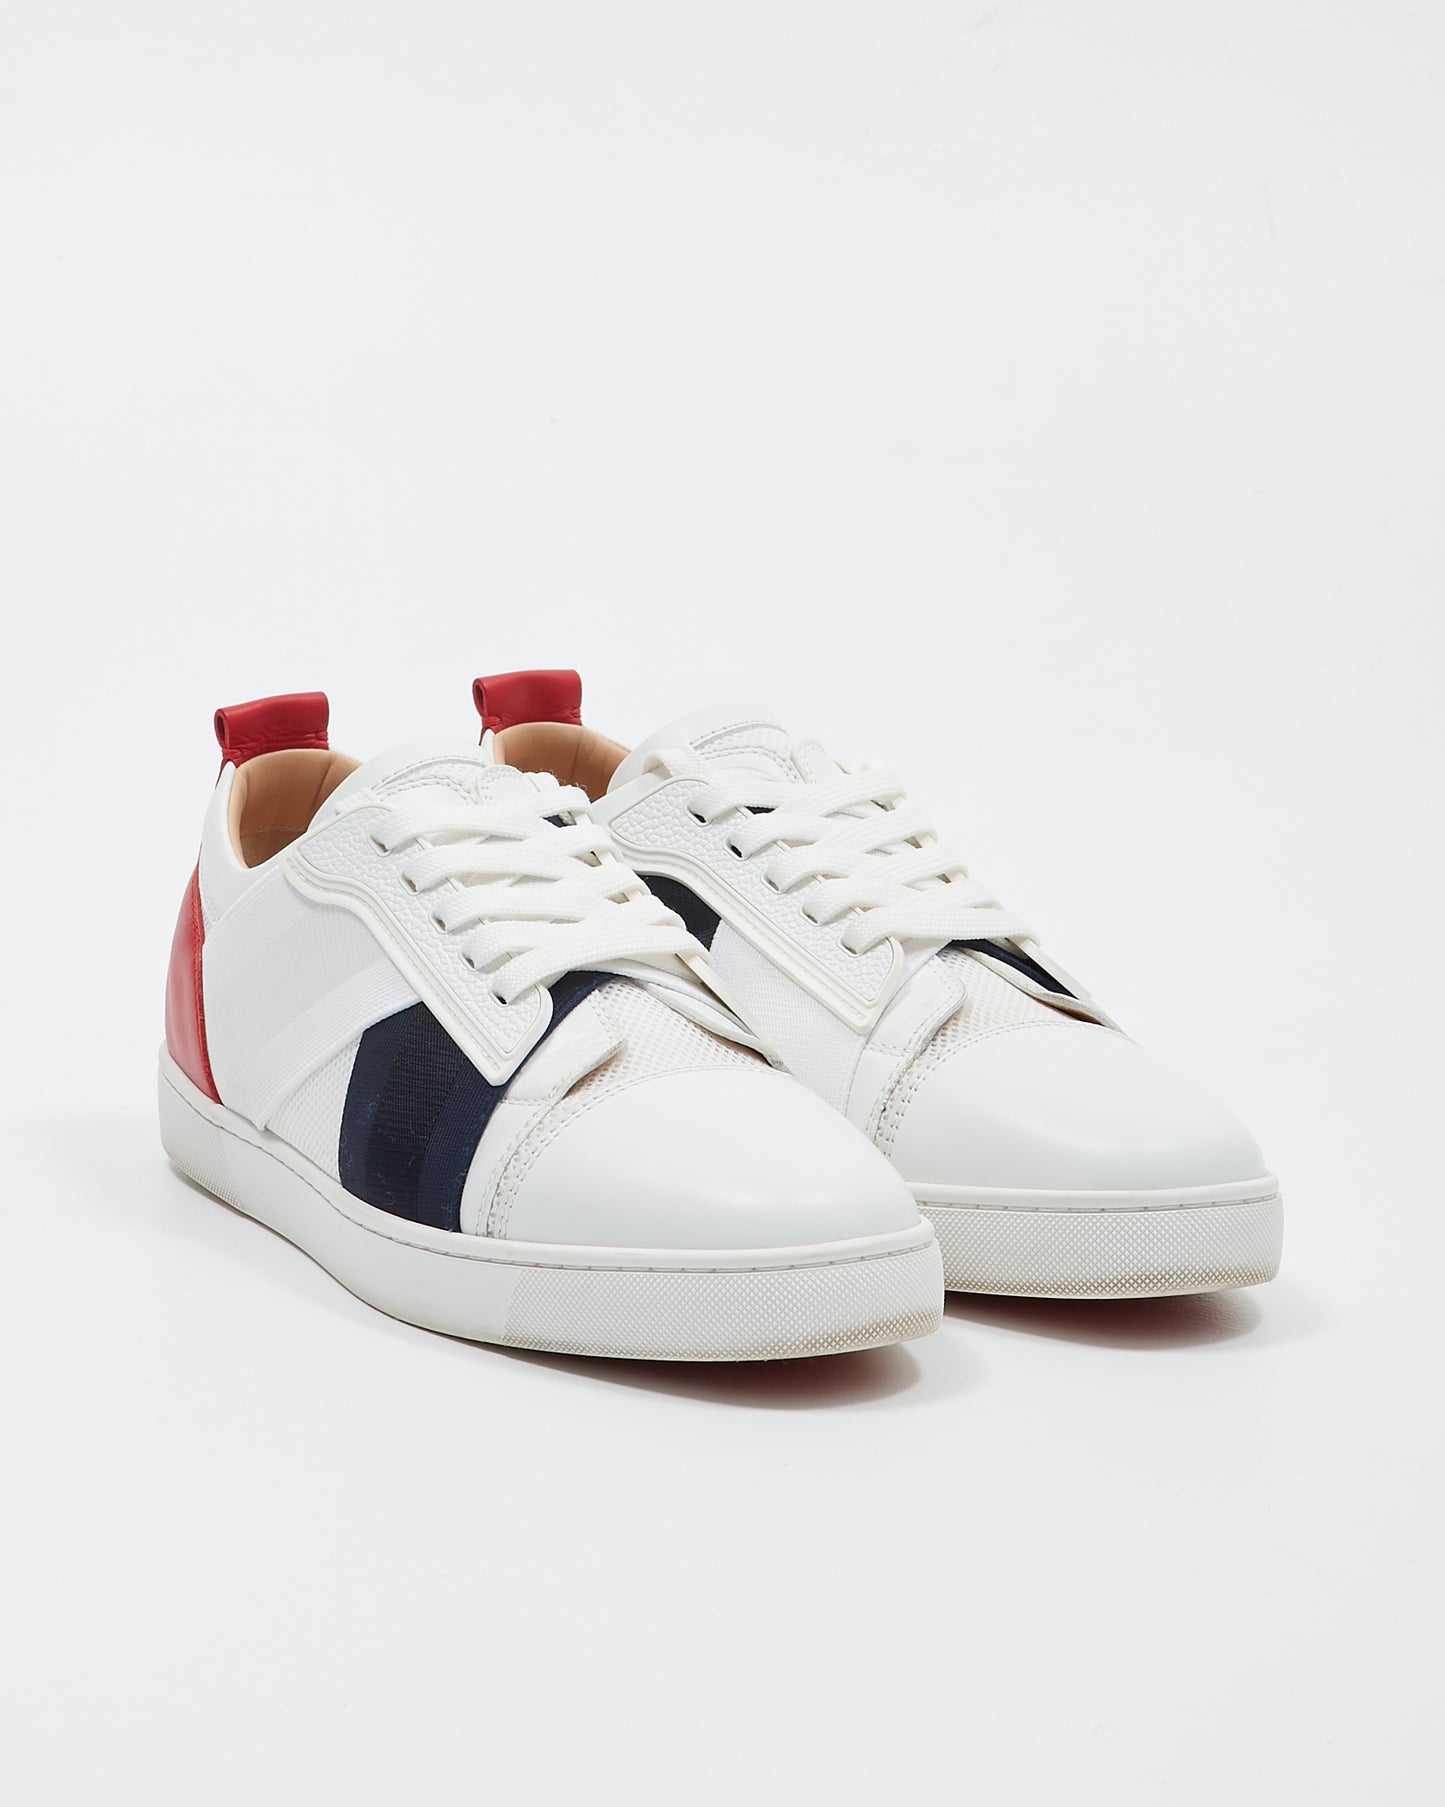 Louboutin Men's White/Red/Black  Elastikid Sneaker - 44.5